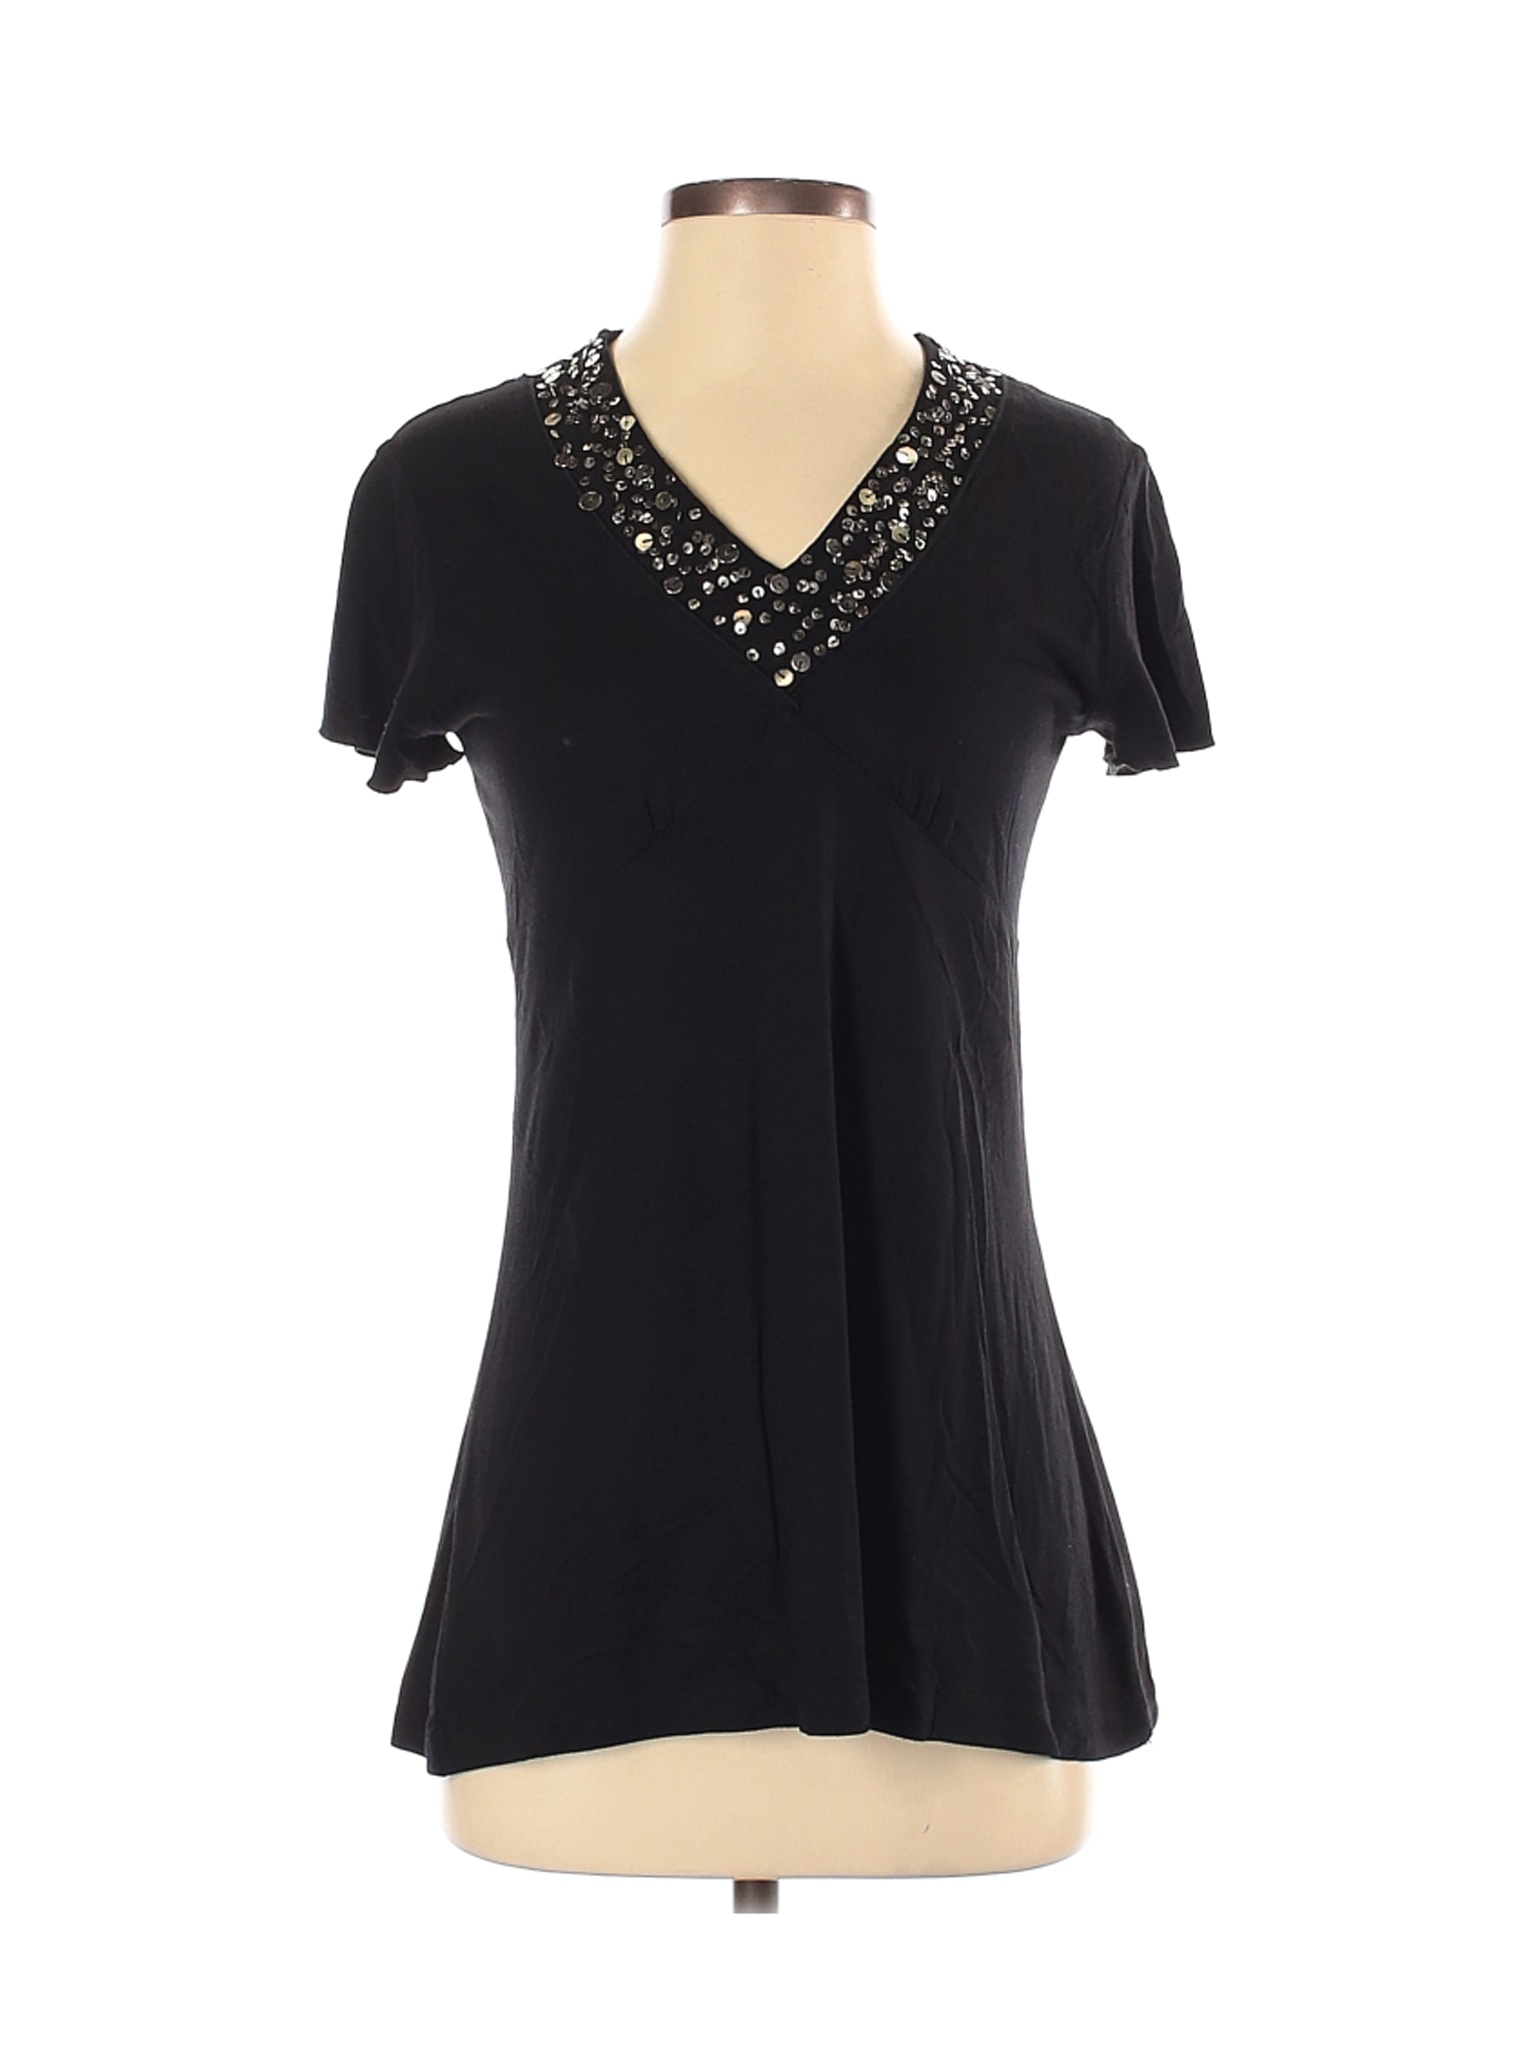 Style&Co Women Black Short Sleeve Top S | eBay